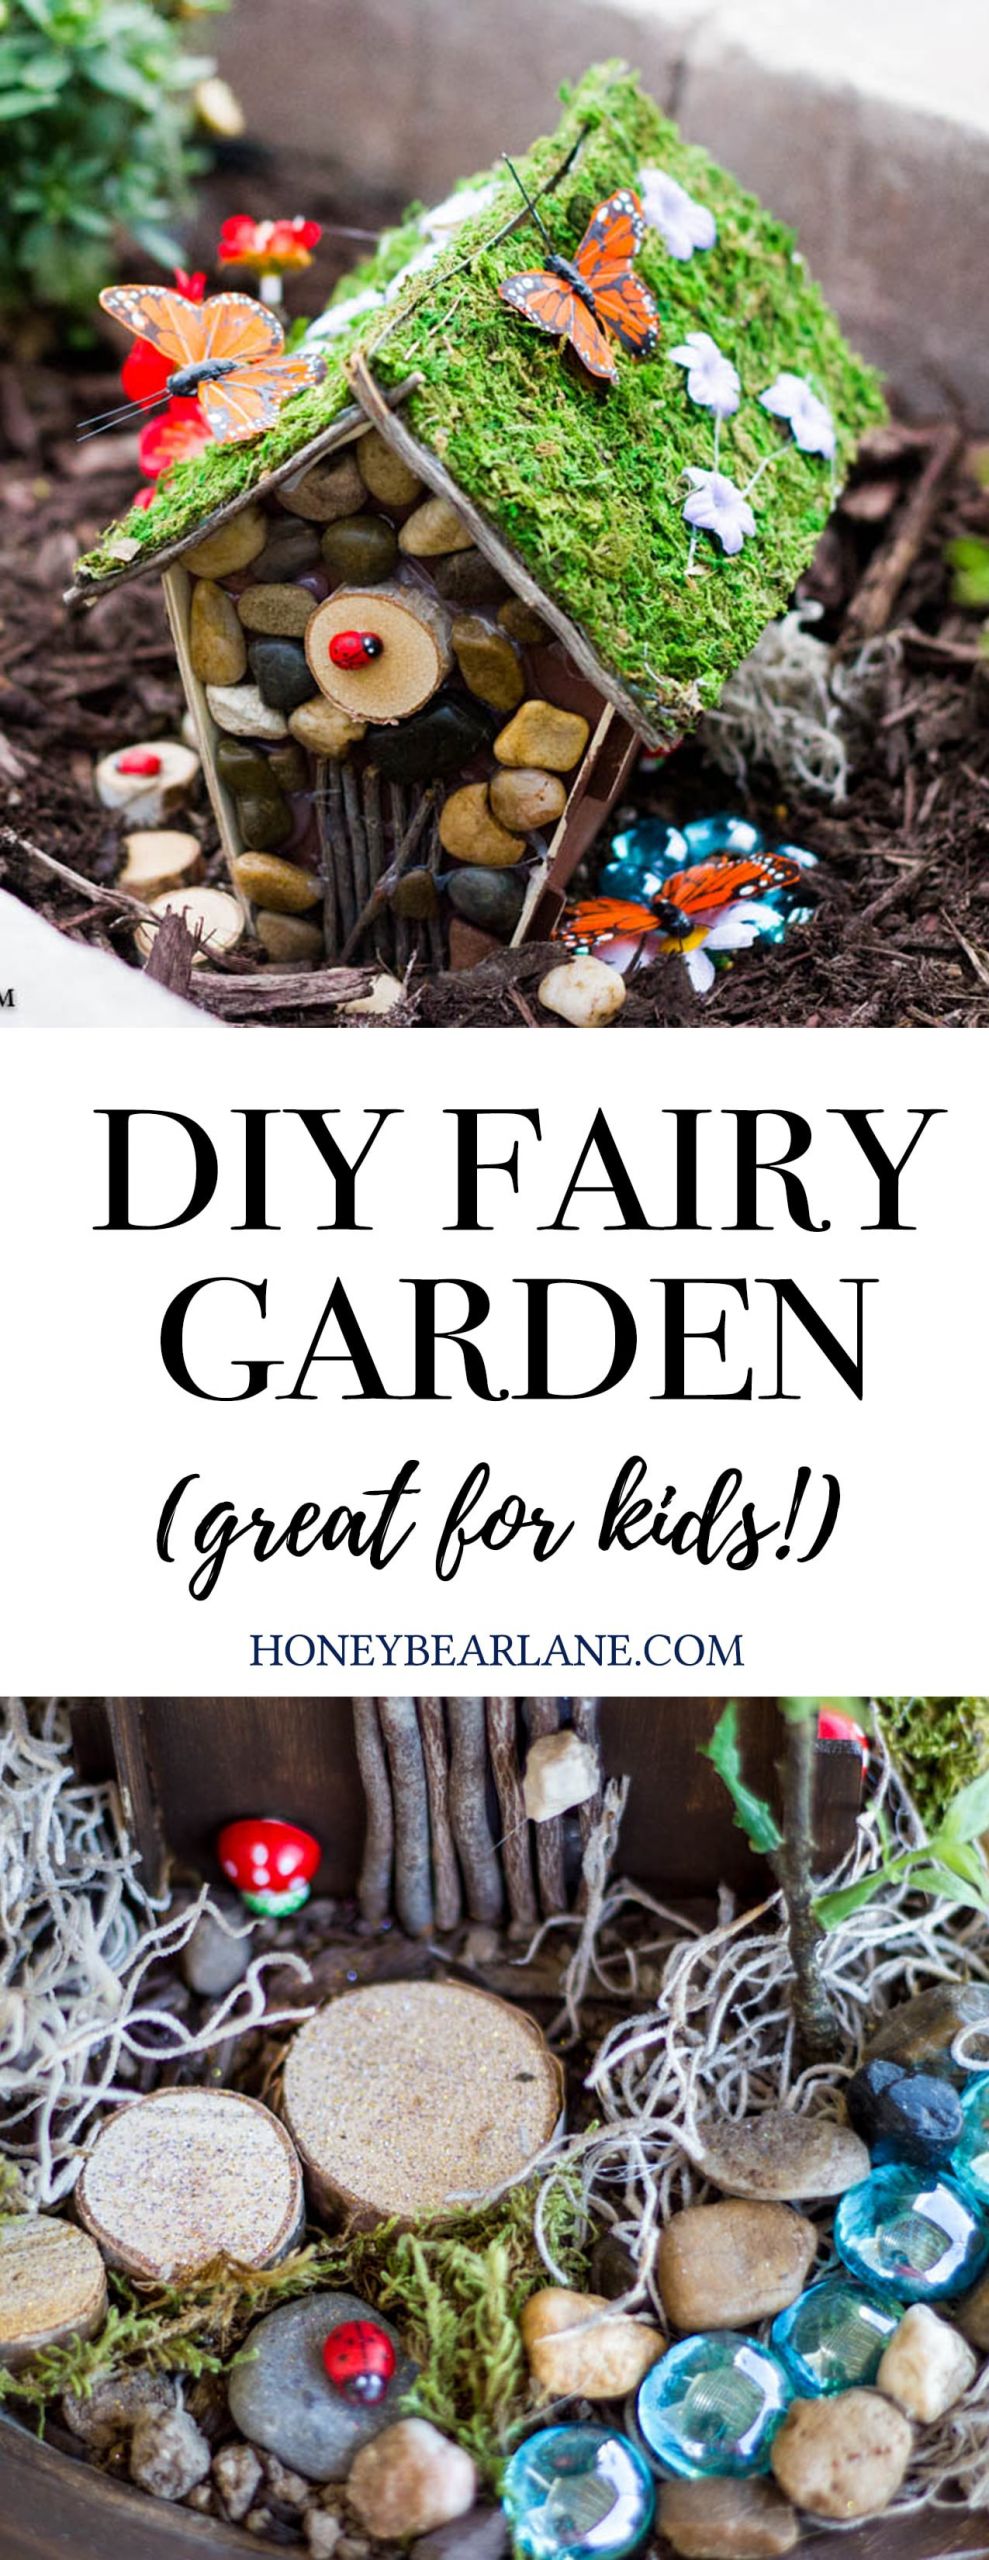 DIY Fairy Garden For Kids
 DIY Fairy Garden for Kids Honeybear Lane